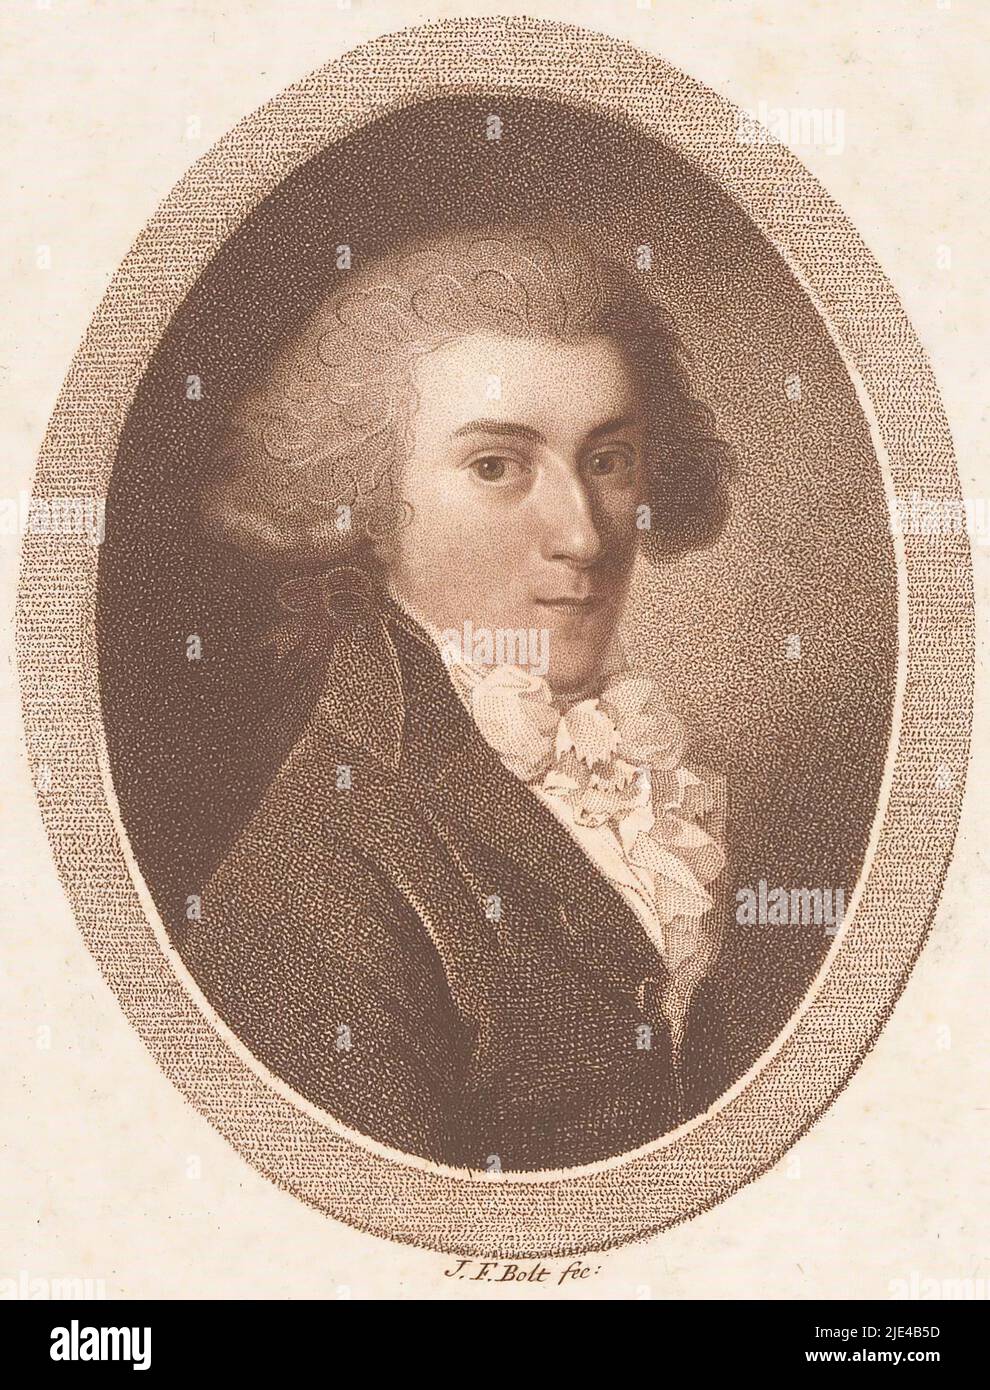 Portrait of August Adolph Leopold, Graf von Lehndorff, Johann Friedrich Bolt, 1779 - 1836, print maker: Johann Friedrich Bolt, (mentioned on object), Berlin, 1779 - 1836, paper, h 181 mm - w 133 mm Stock Photo